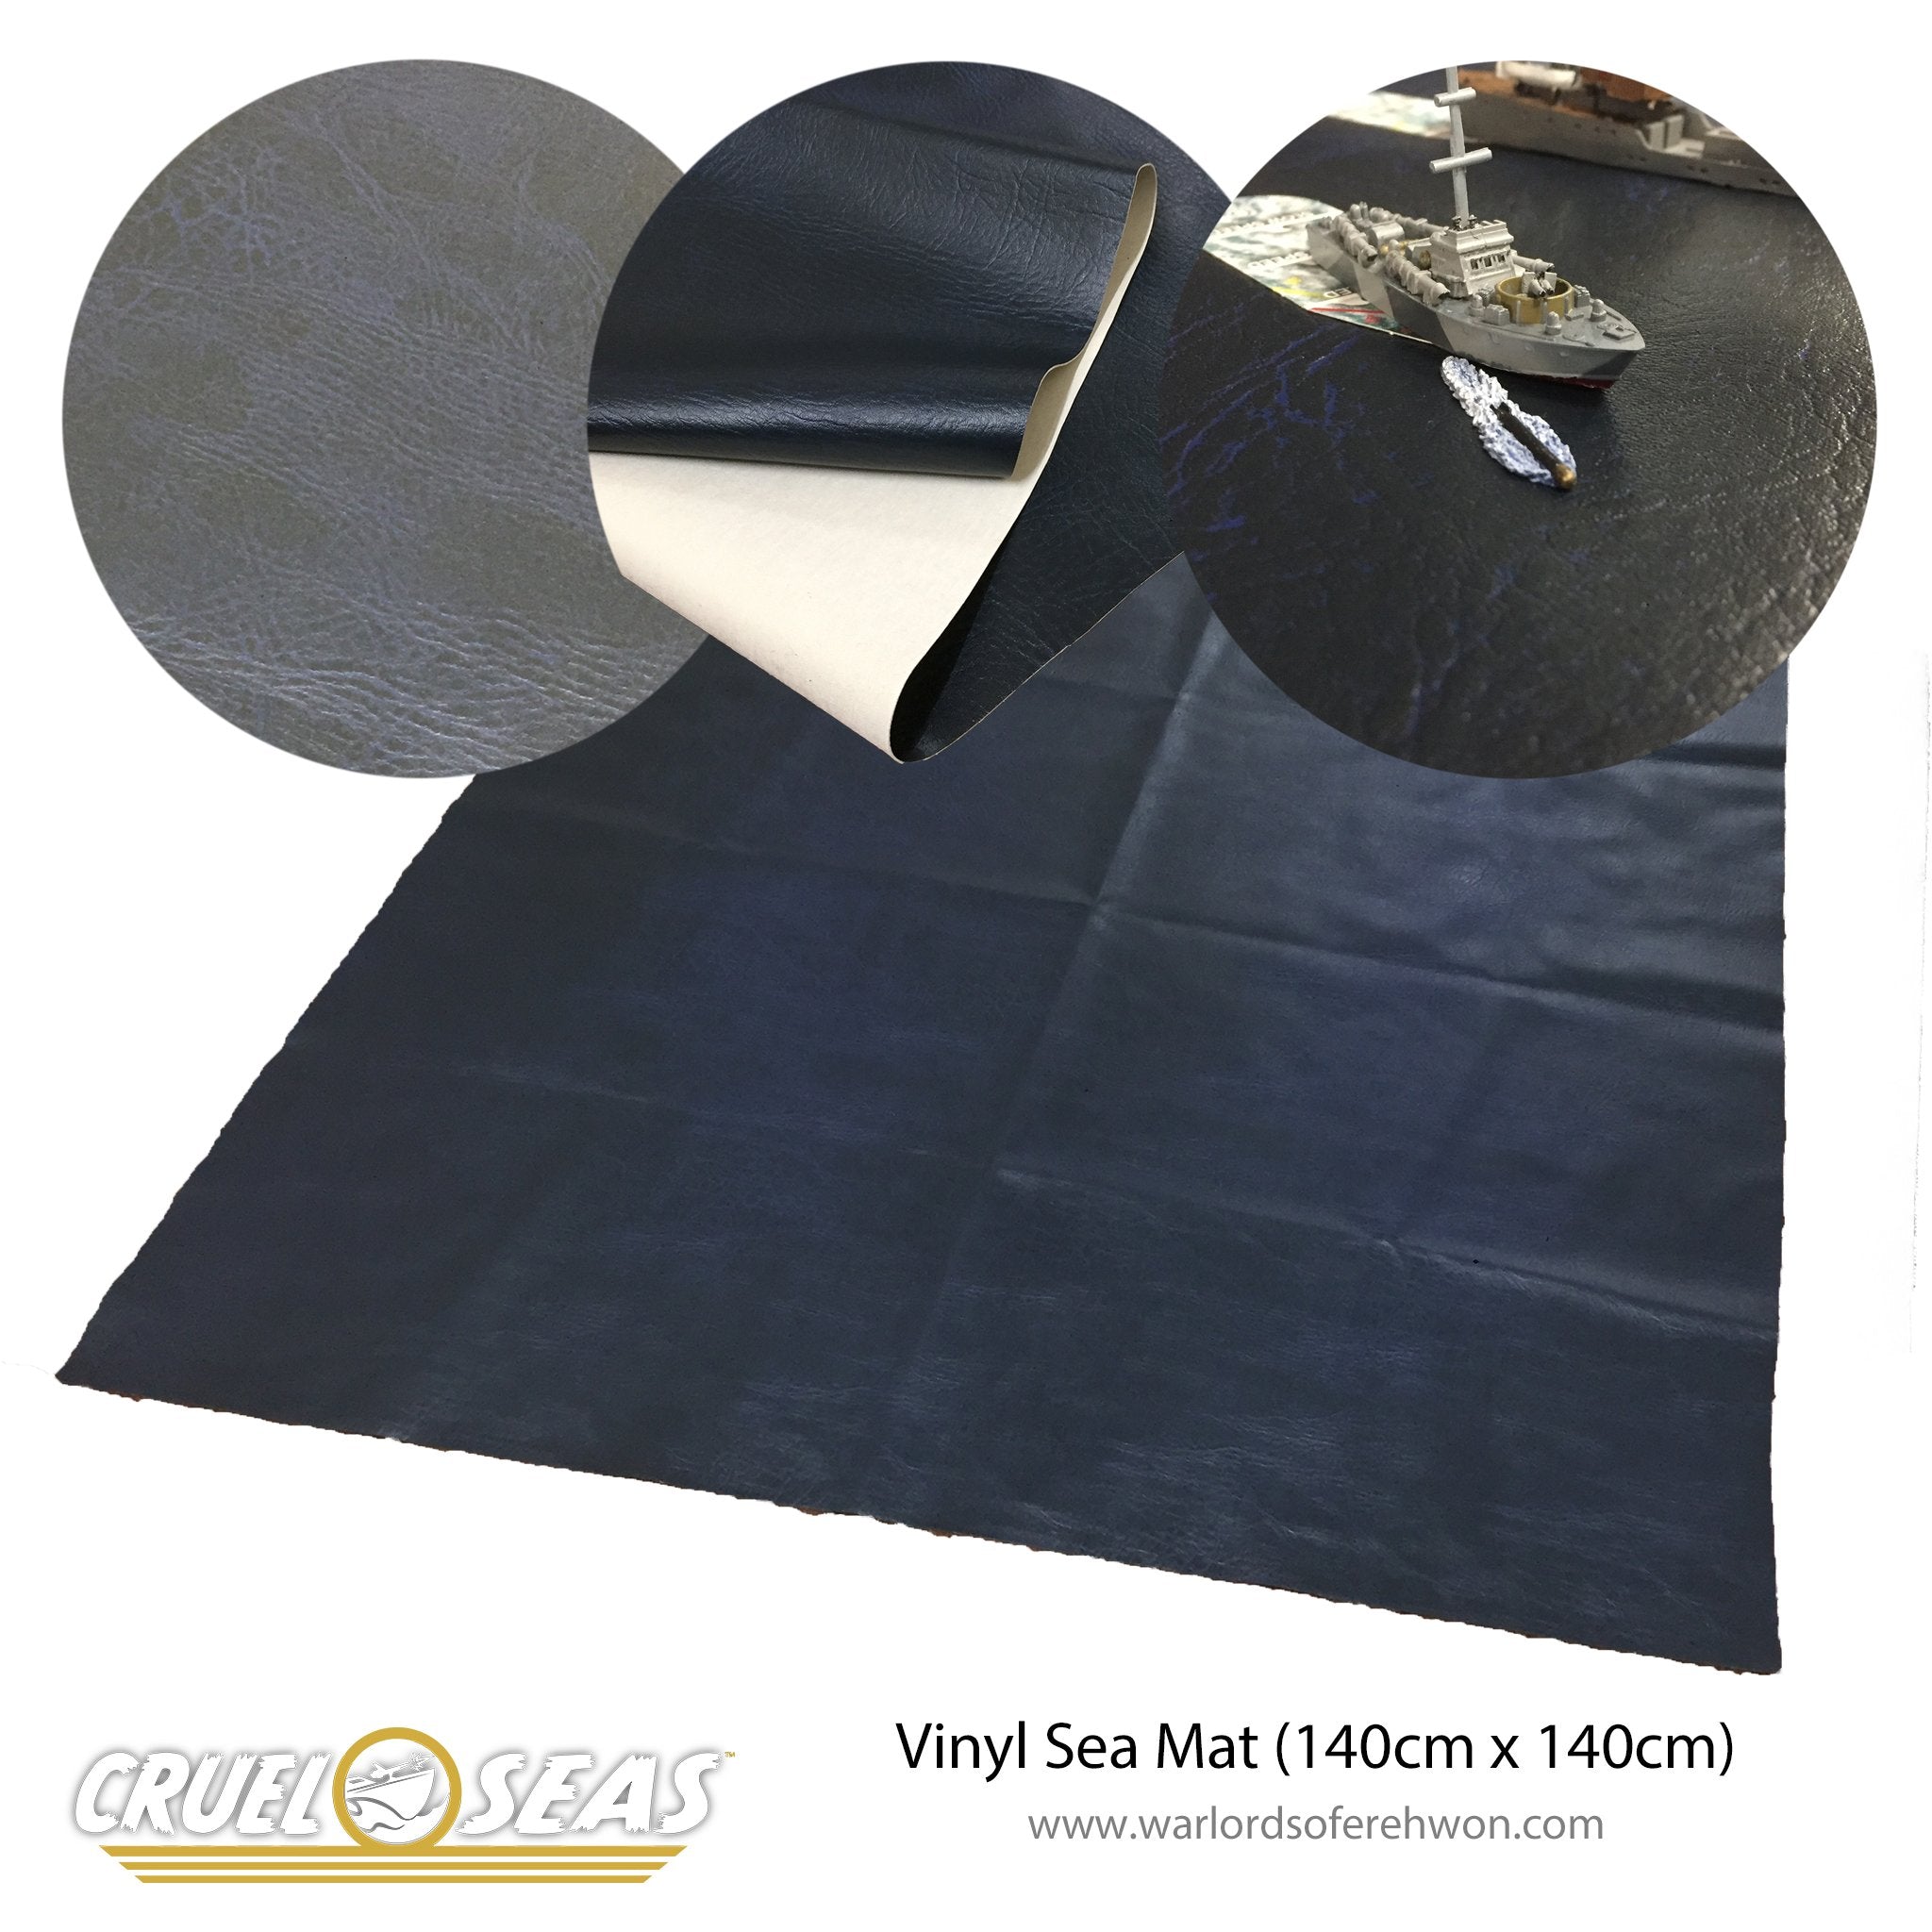 Cruel Seas vinyl Sea Mat (140cm x 140cm)